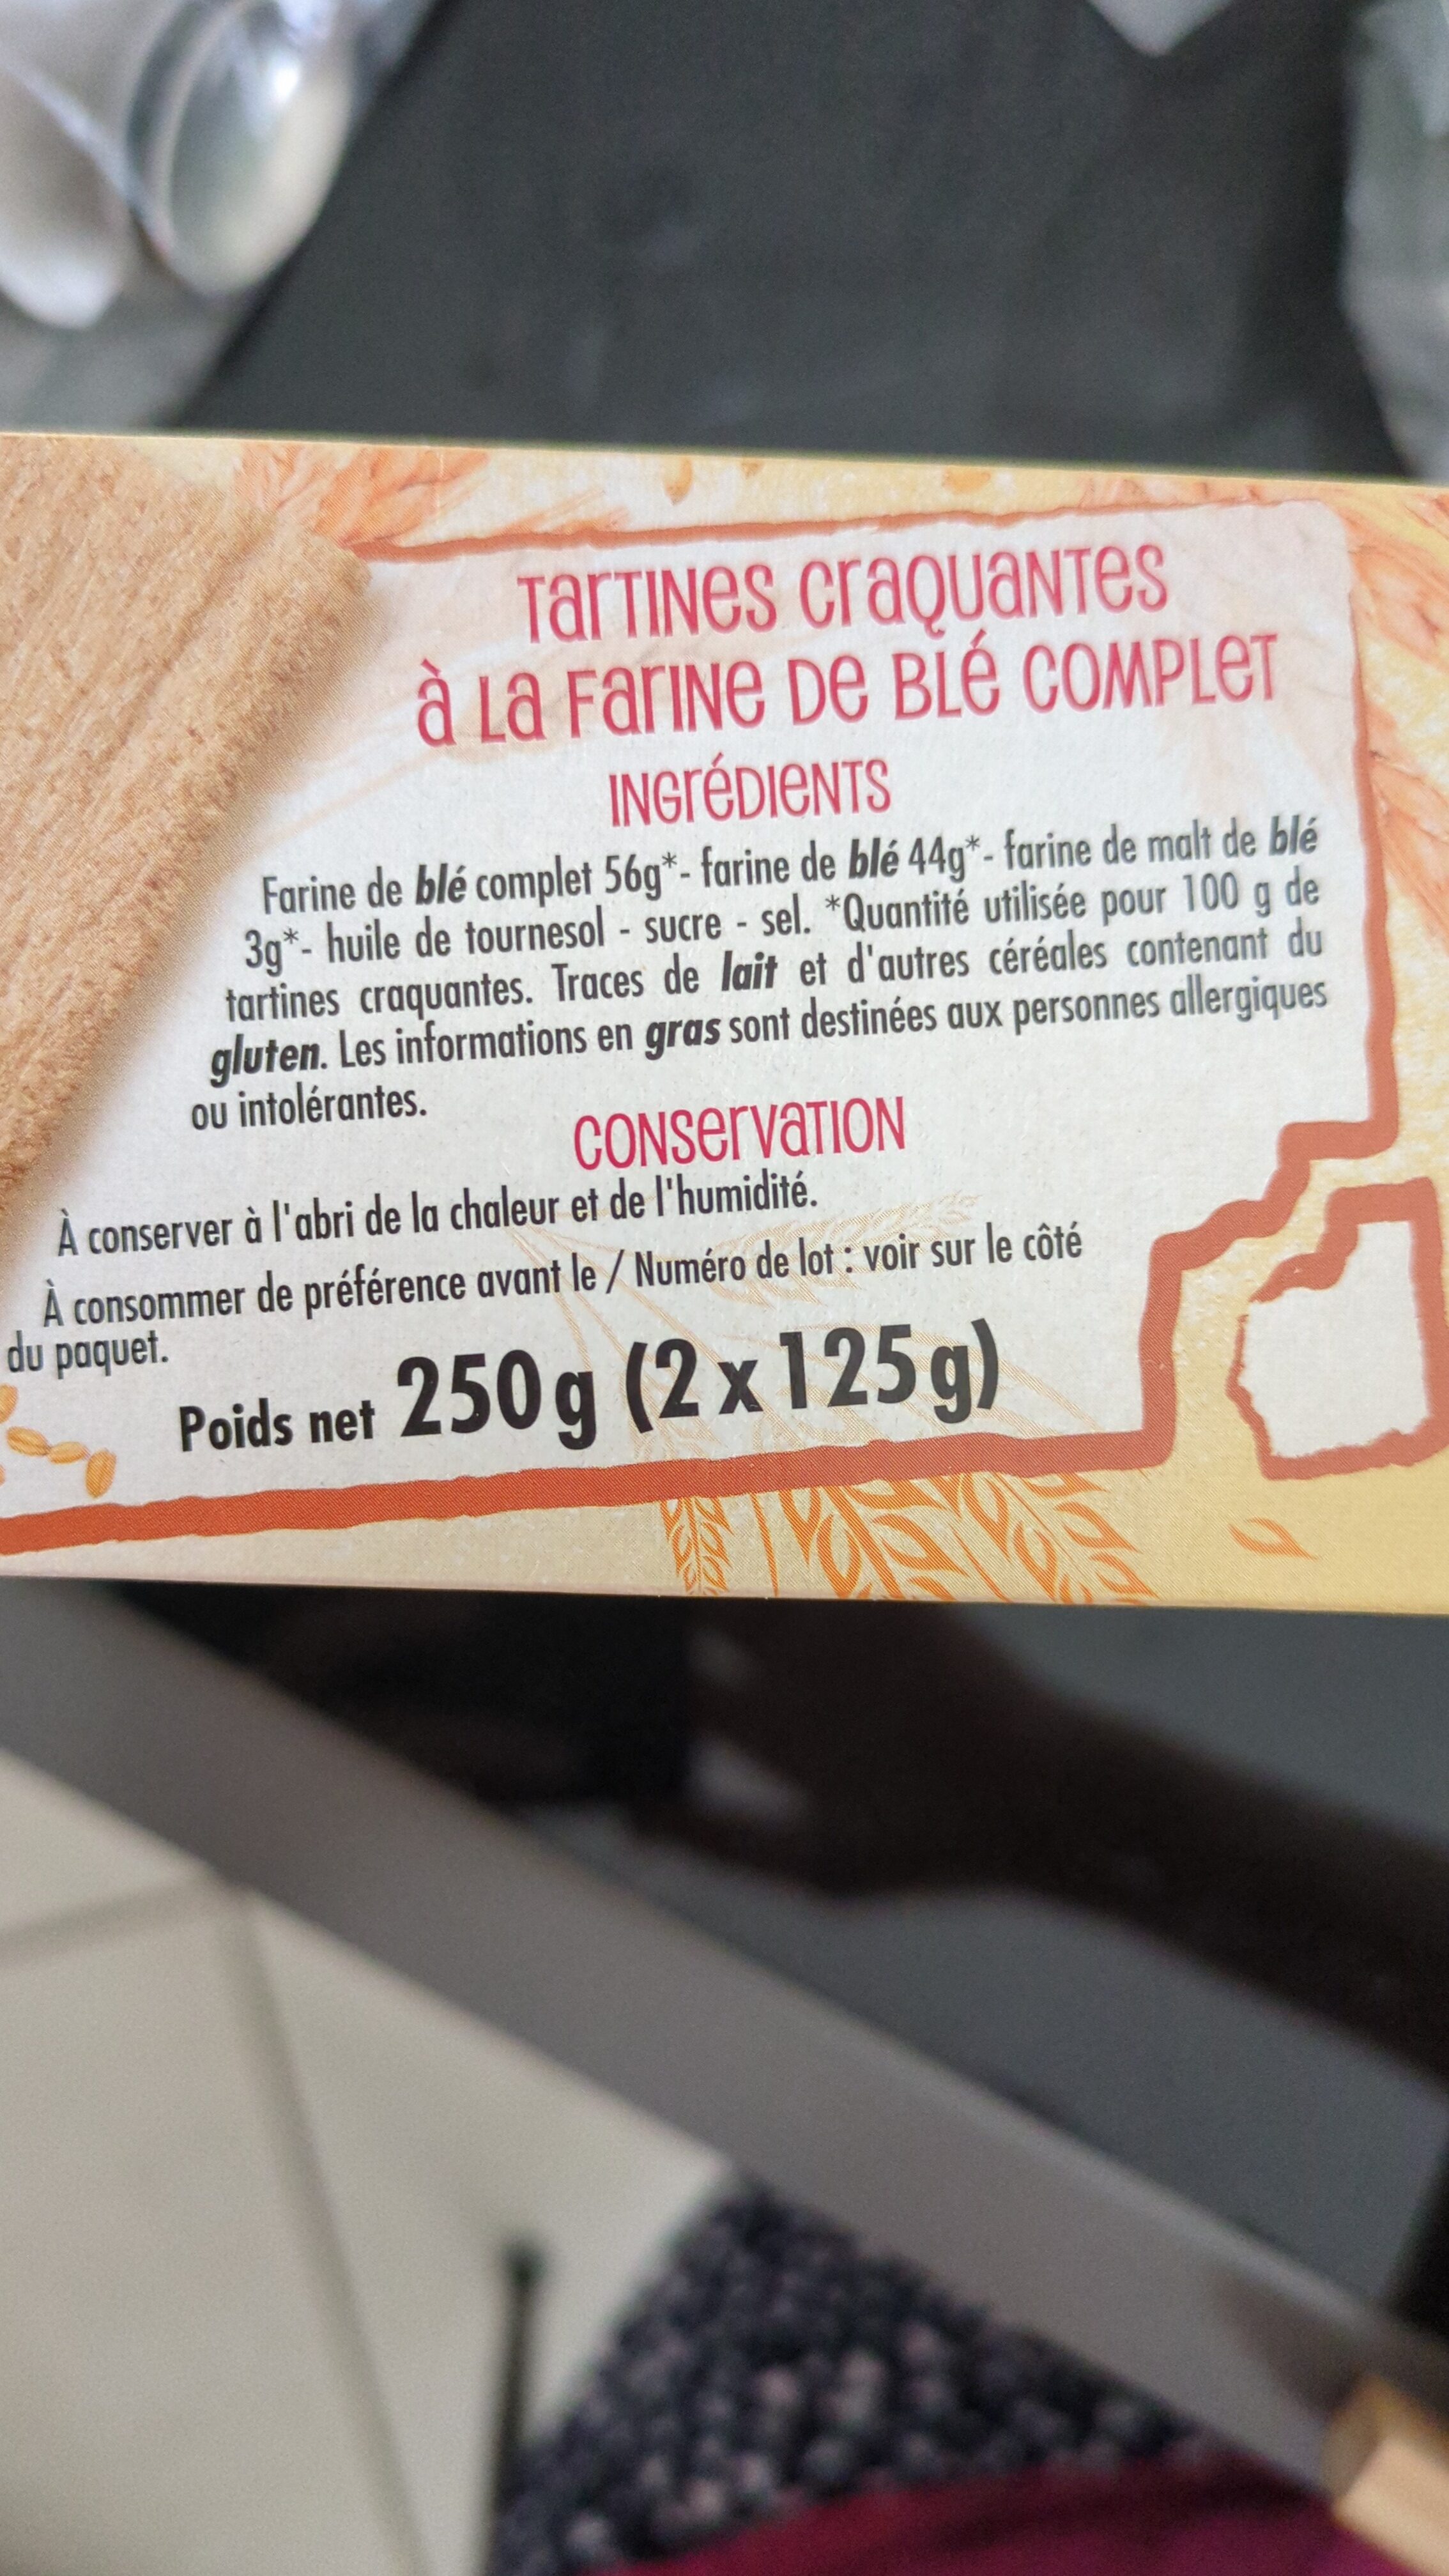 Tartines craquantes au blé complet - Ingredients - fr